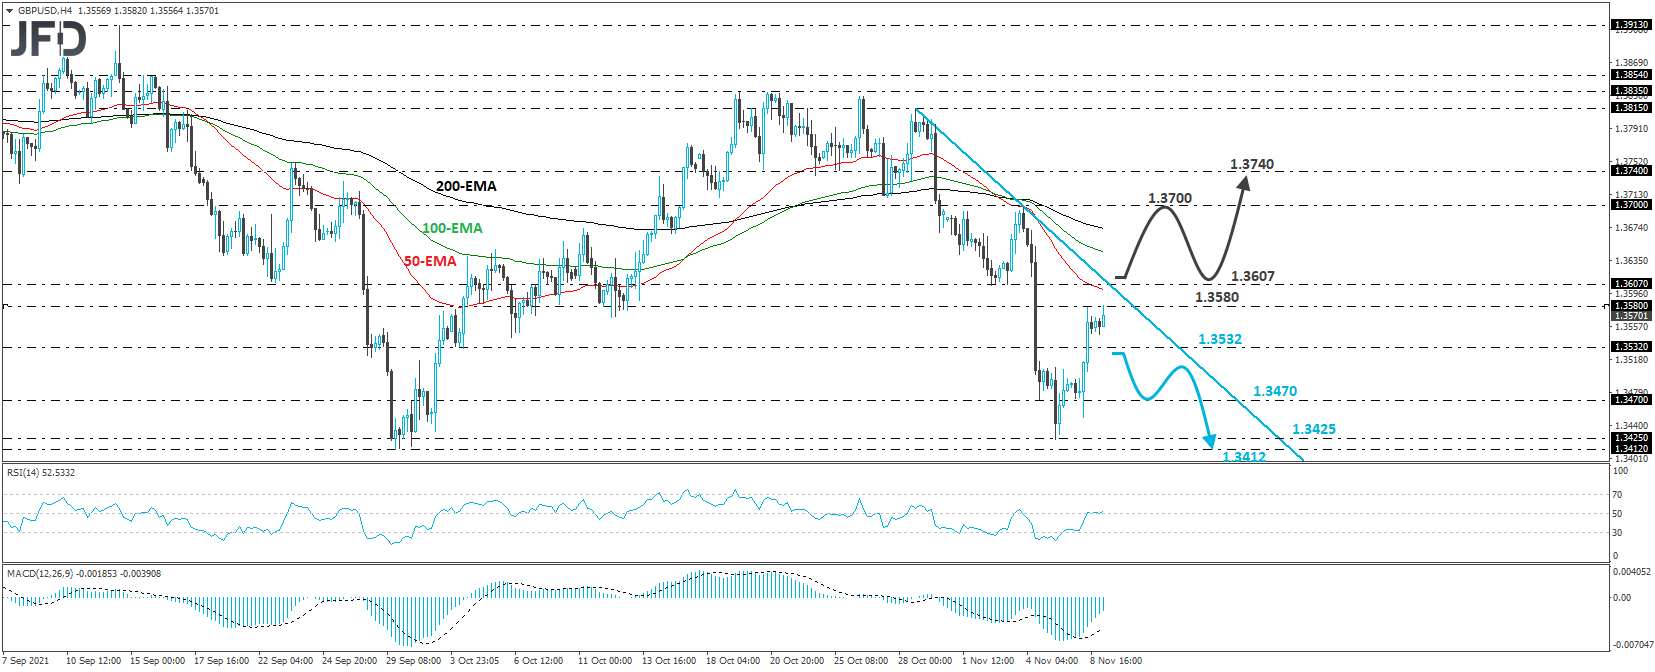 GBP/USD 4-hour chart technical analysis.